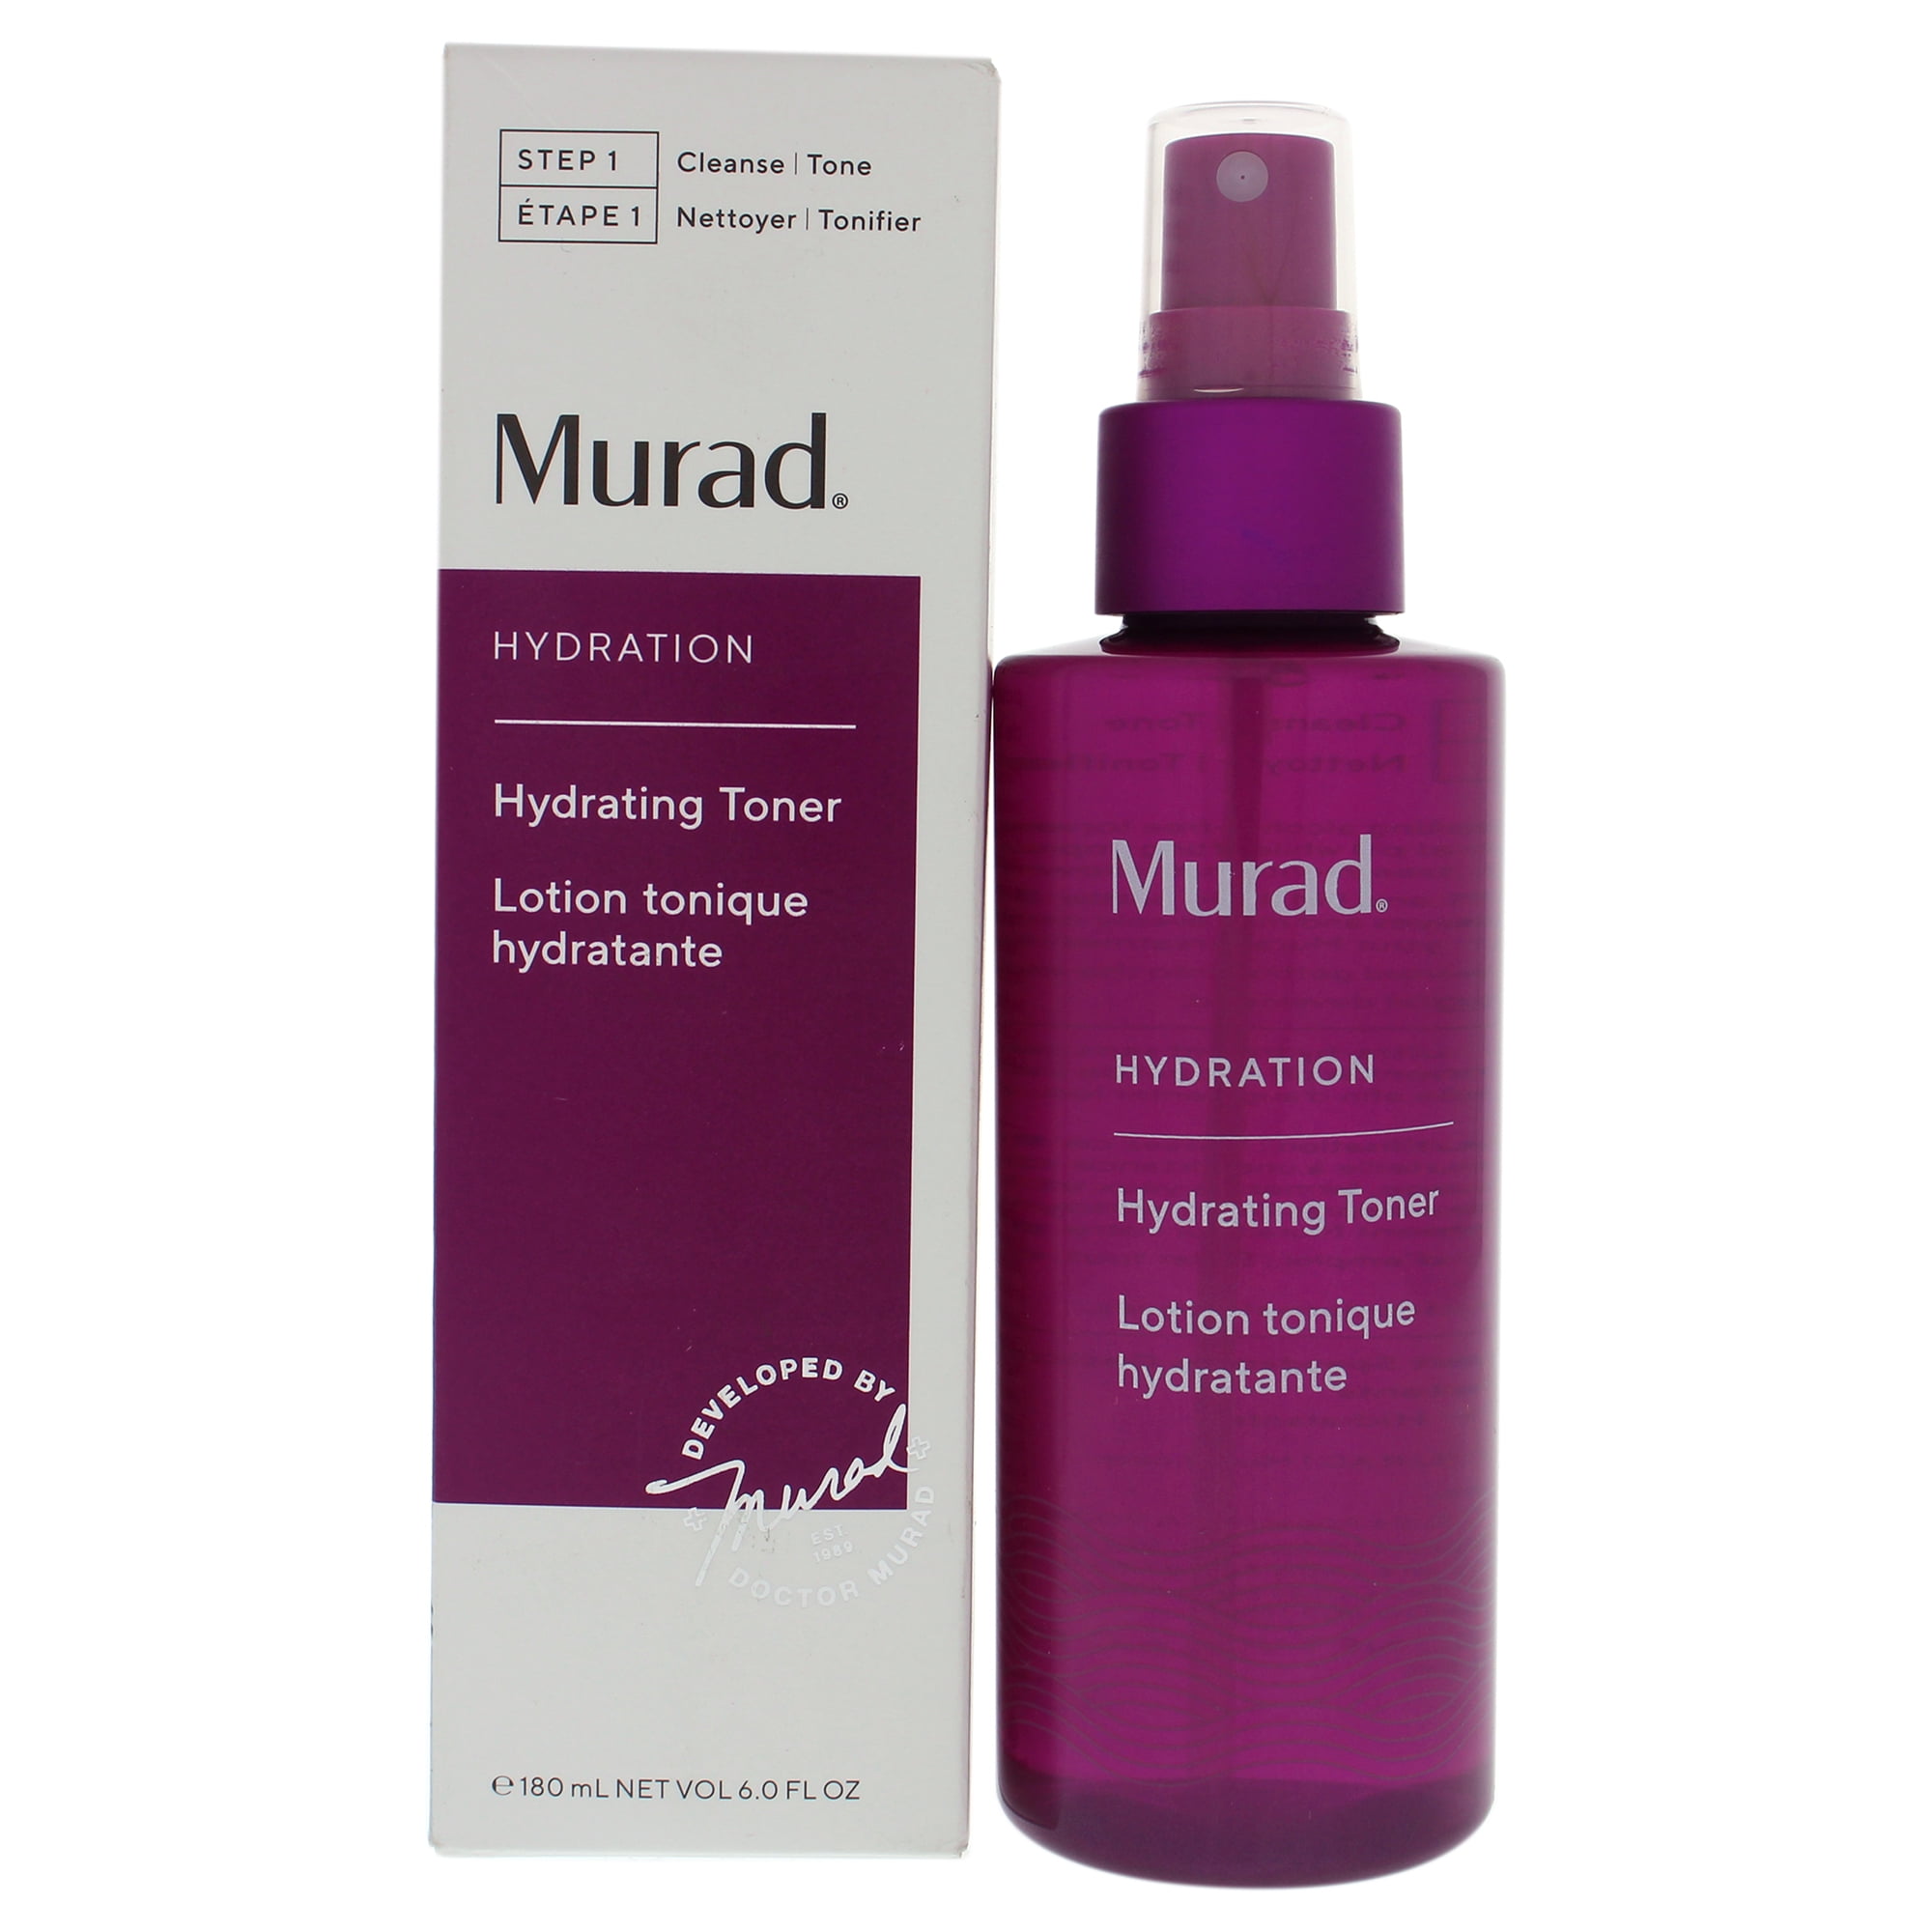 Murad Resurgence Hydrating Facial Toner - Step 1 Cleanse/Tone (6.0 fl oz) Walmart.com